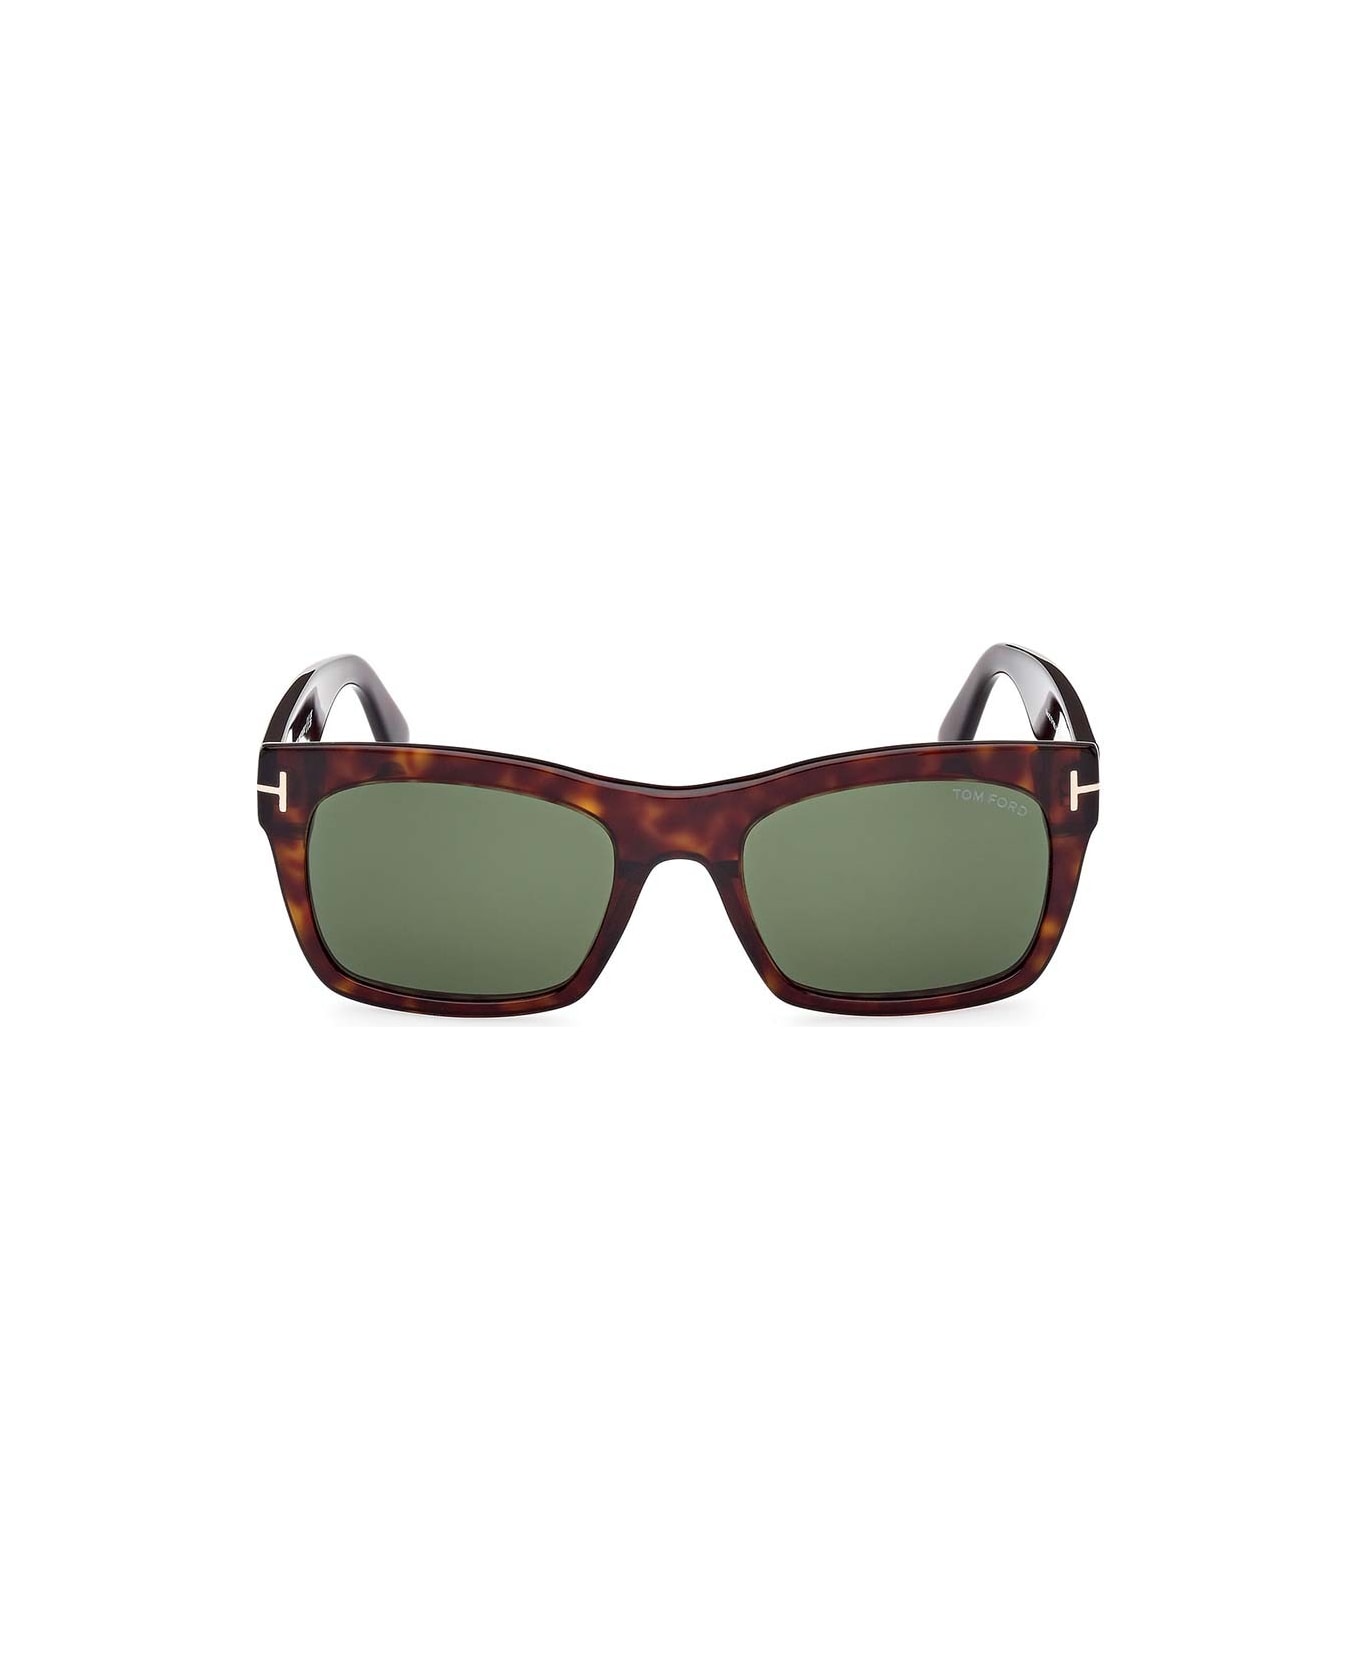 Tom Ford Eyewear Eyewear - Marrone/Verde